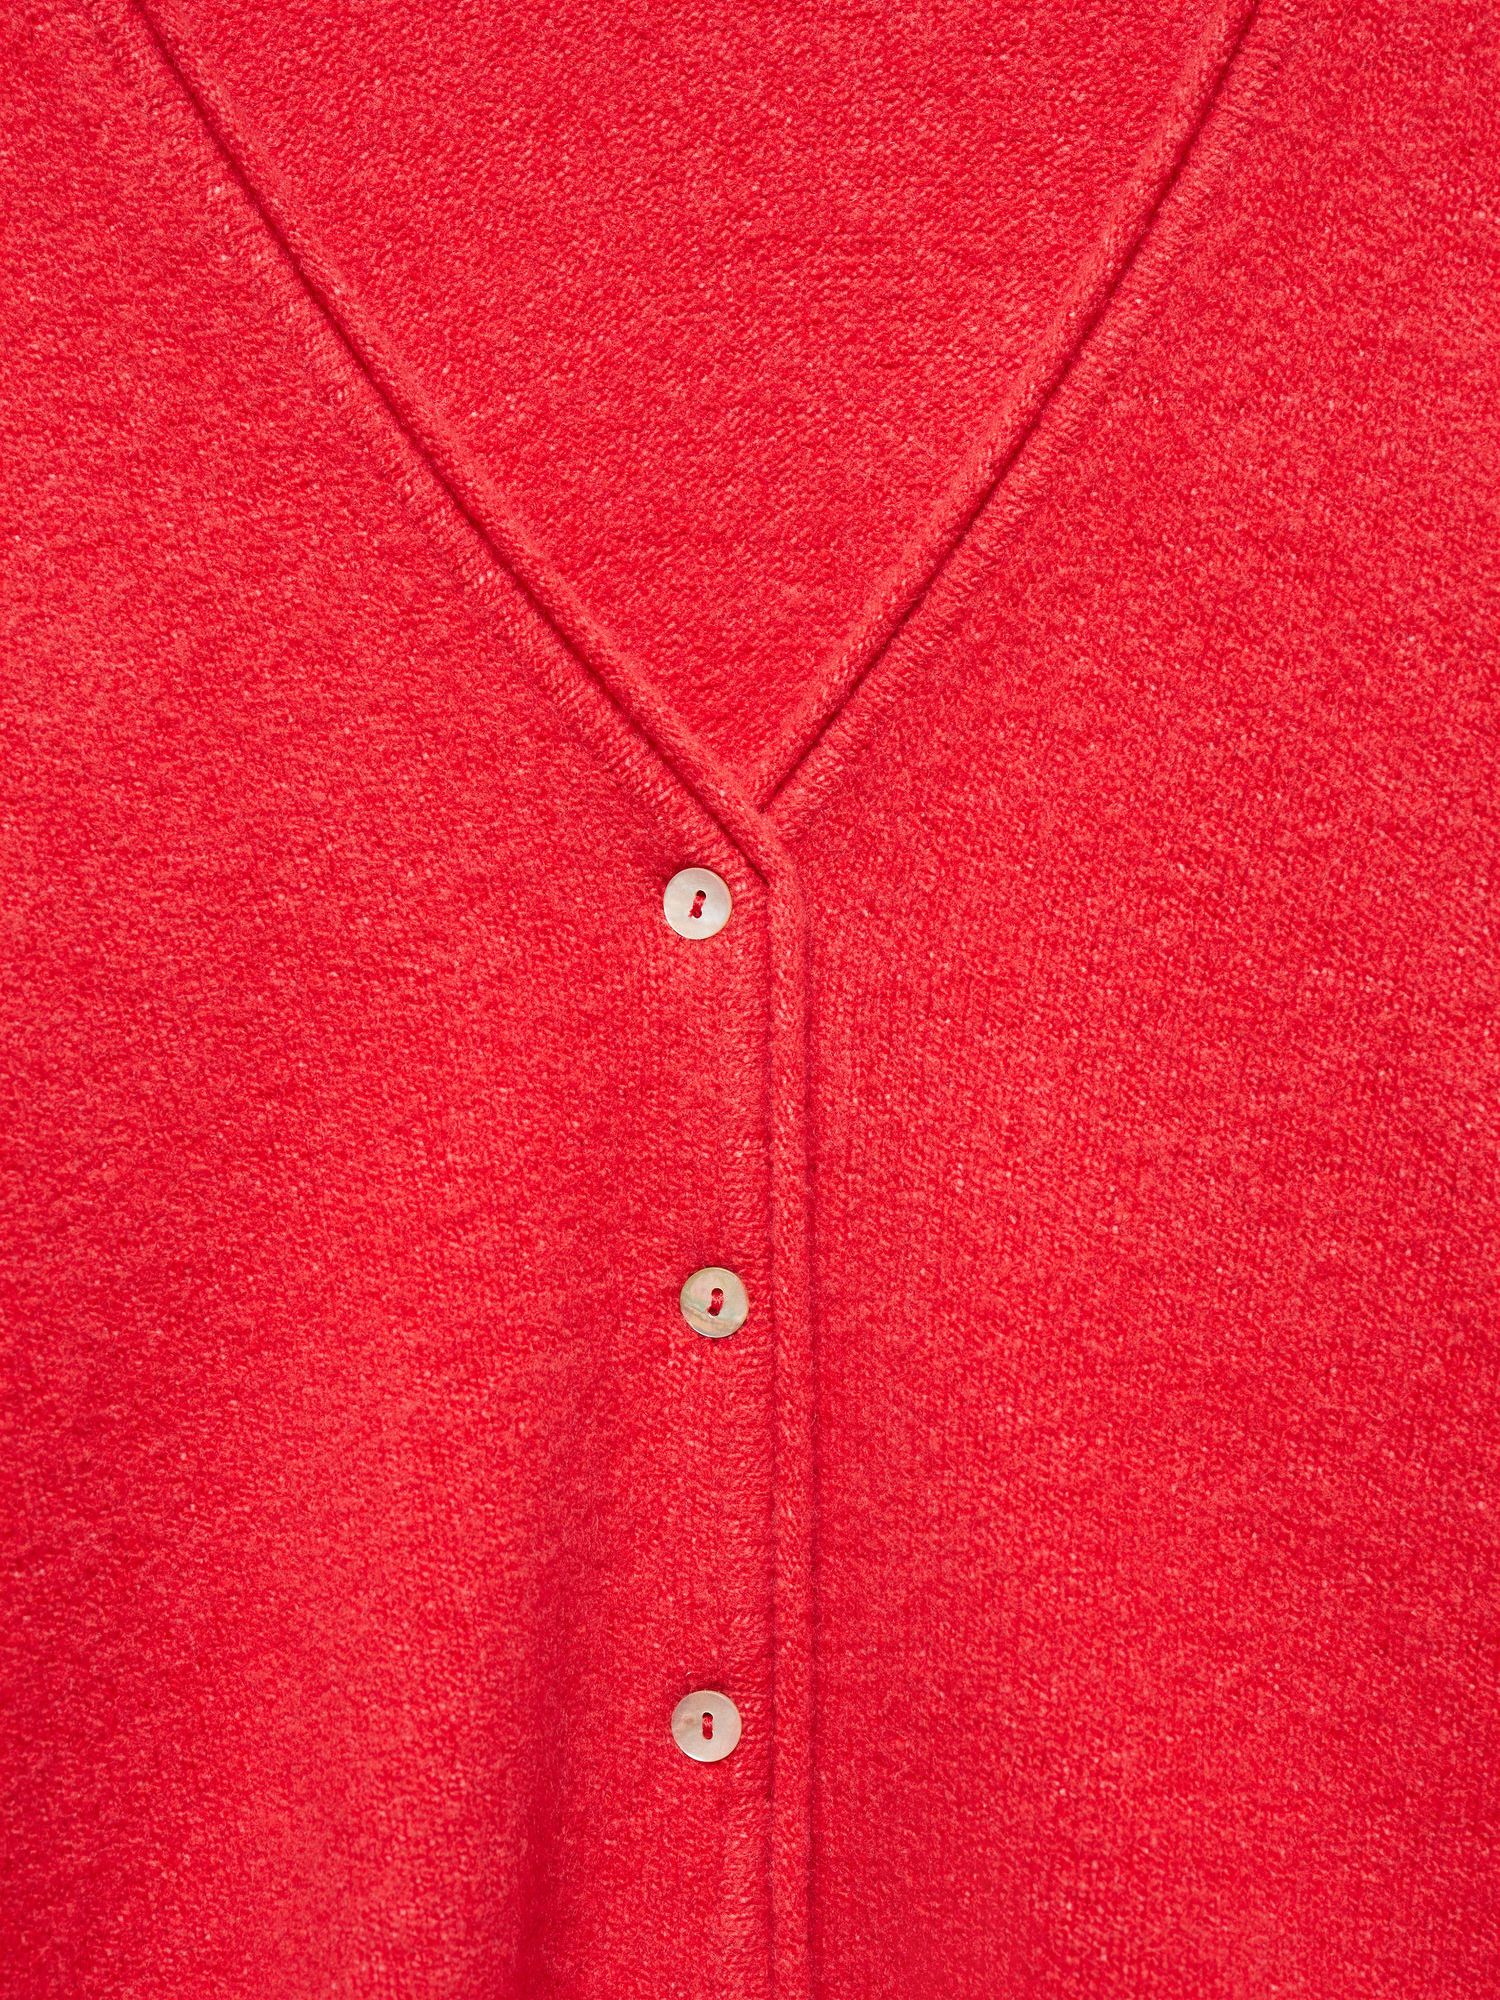 Mango Knit Button Cardigan, Bright Red, L